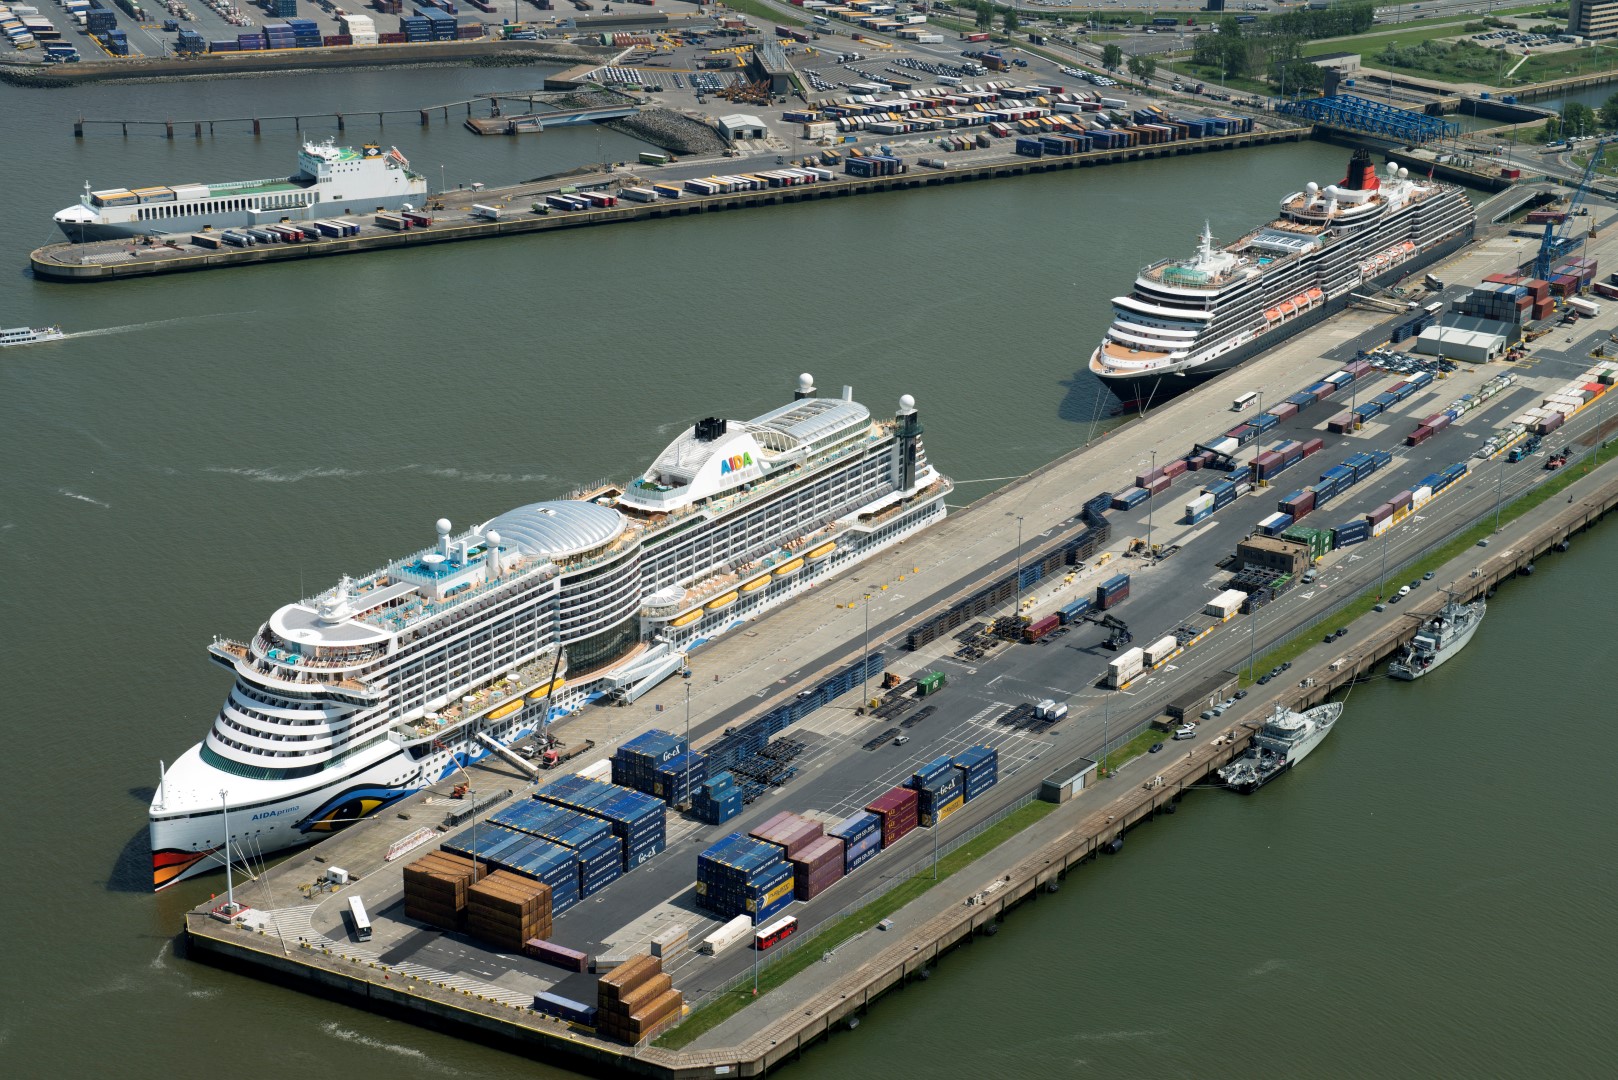 cruise ship arrivals zeebrugge